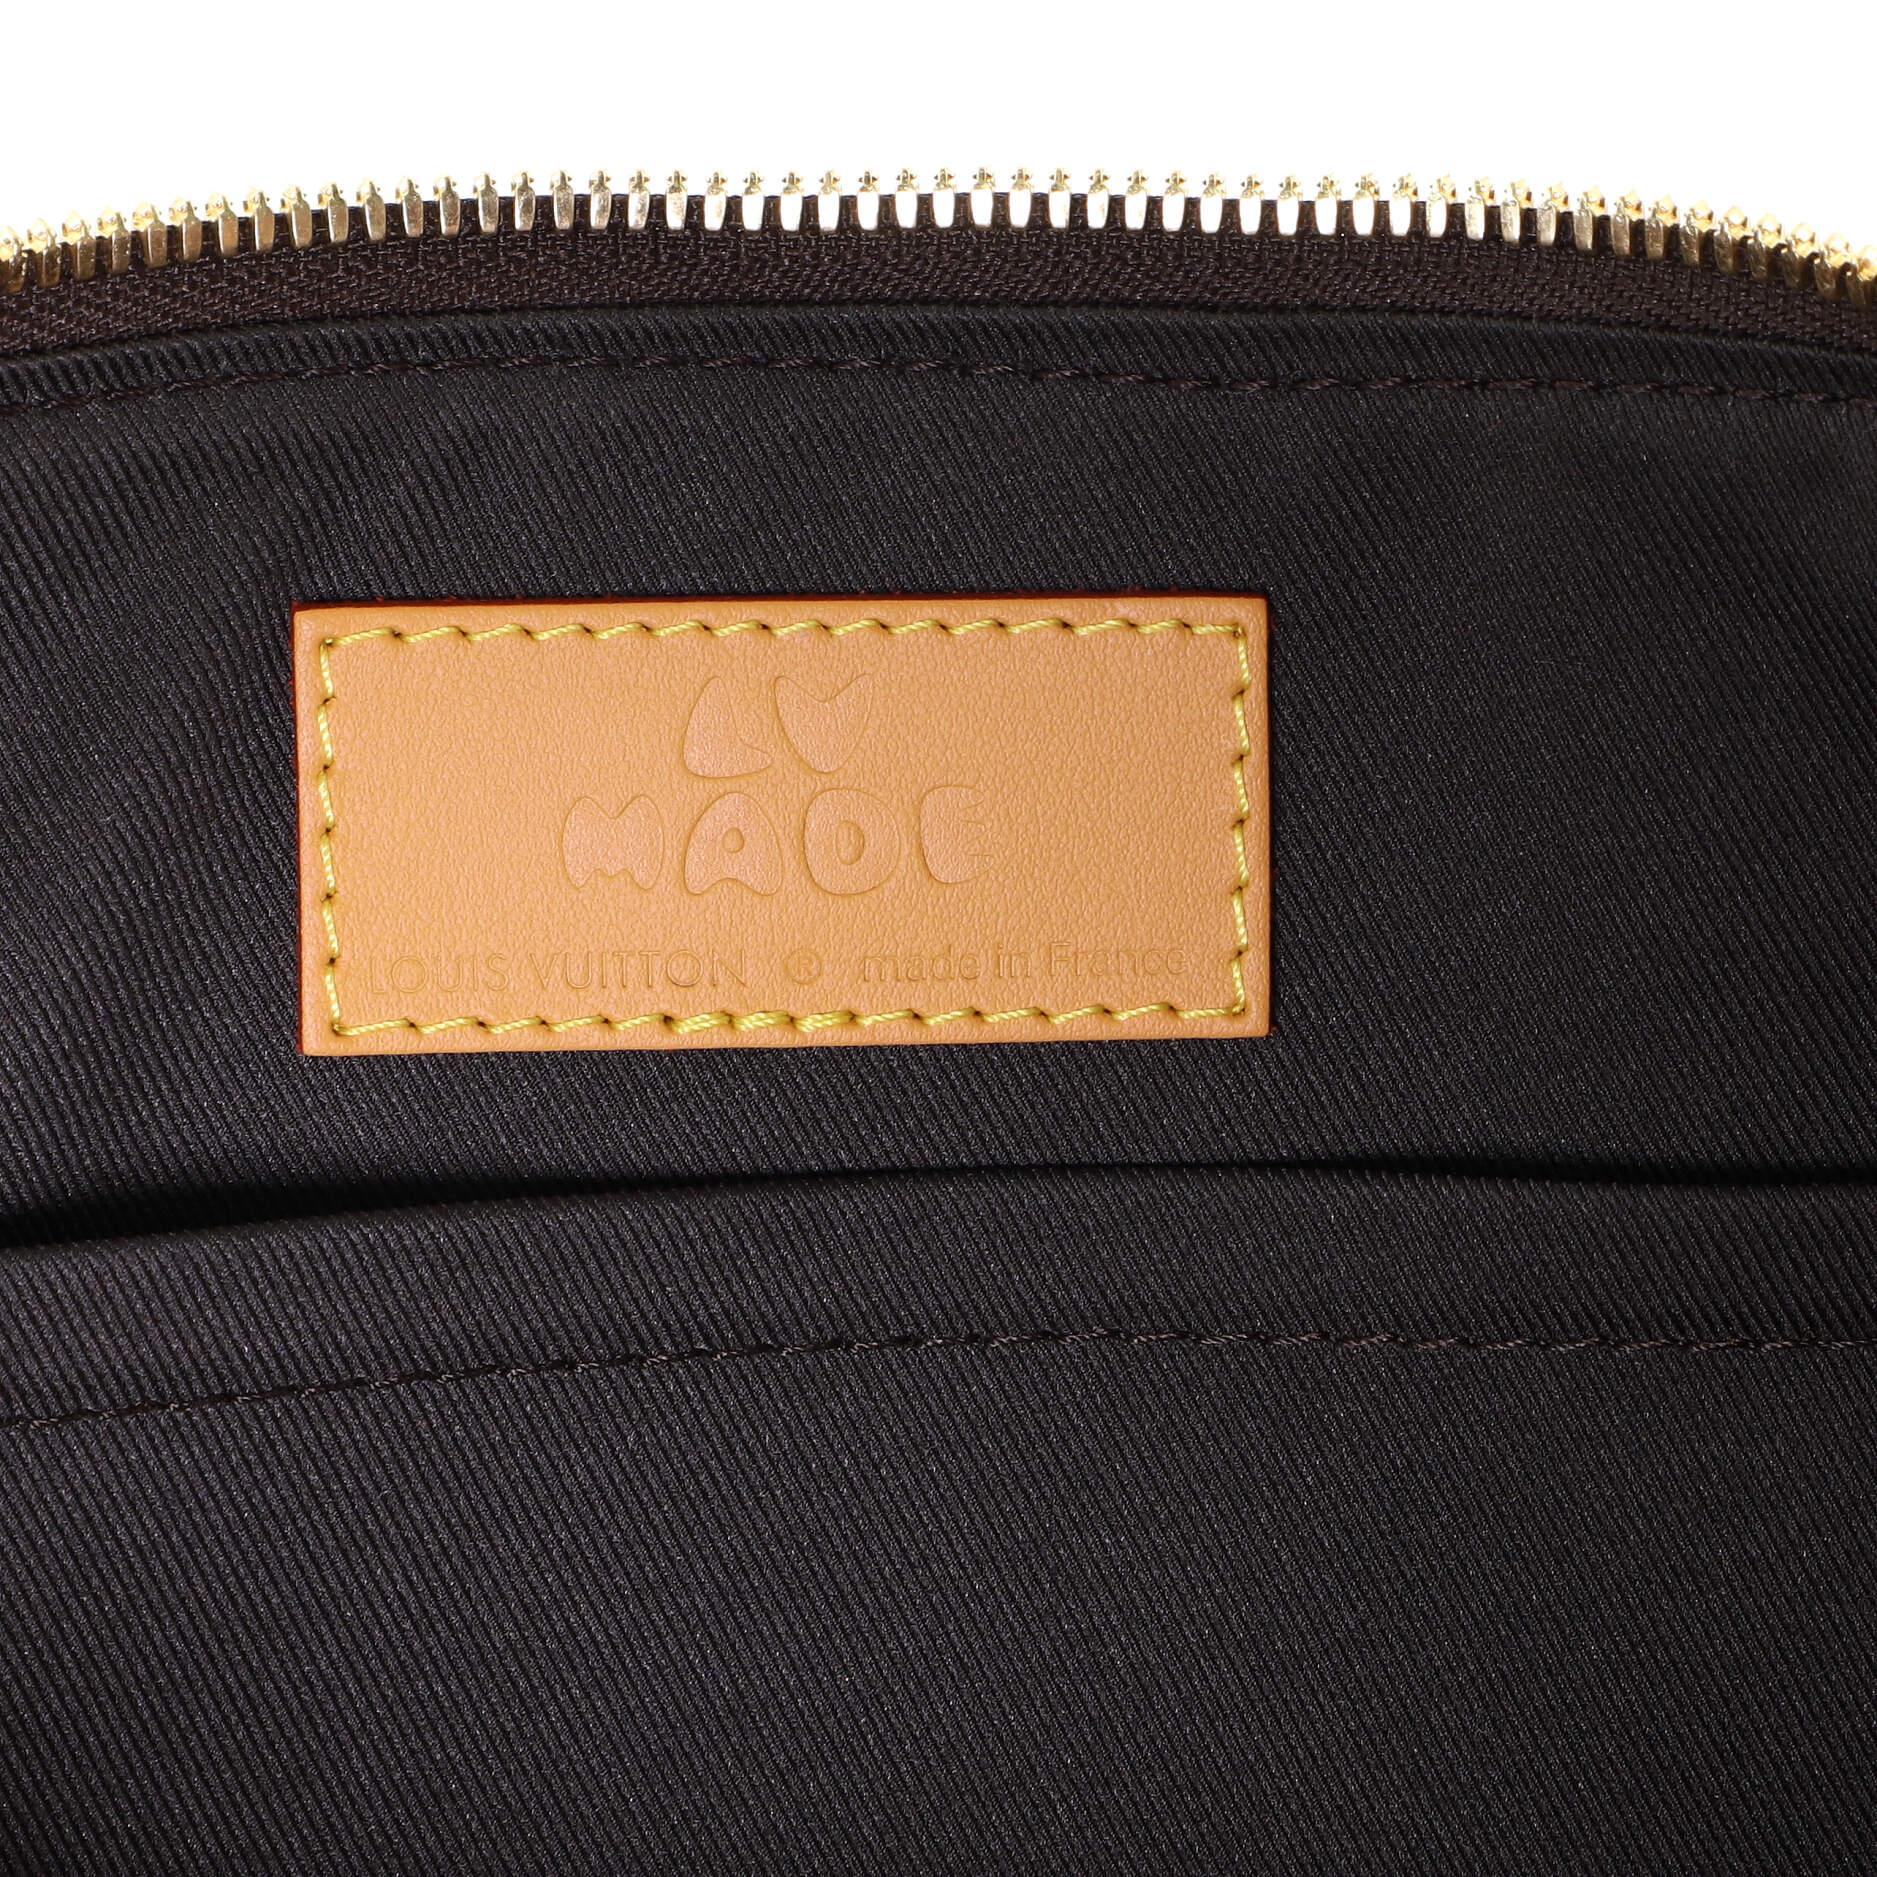 Louis Vuitton City Keepall Bag Limited Edition Stripes Monogram Canvas 1